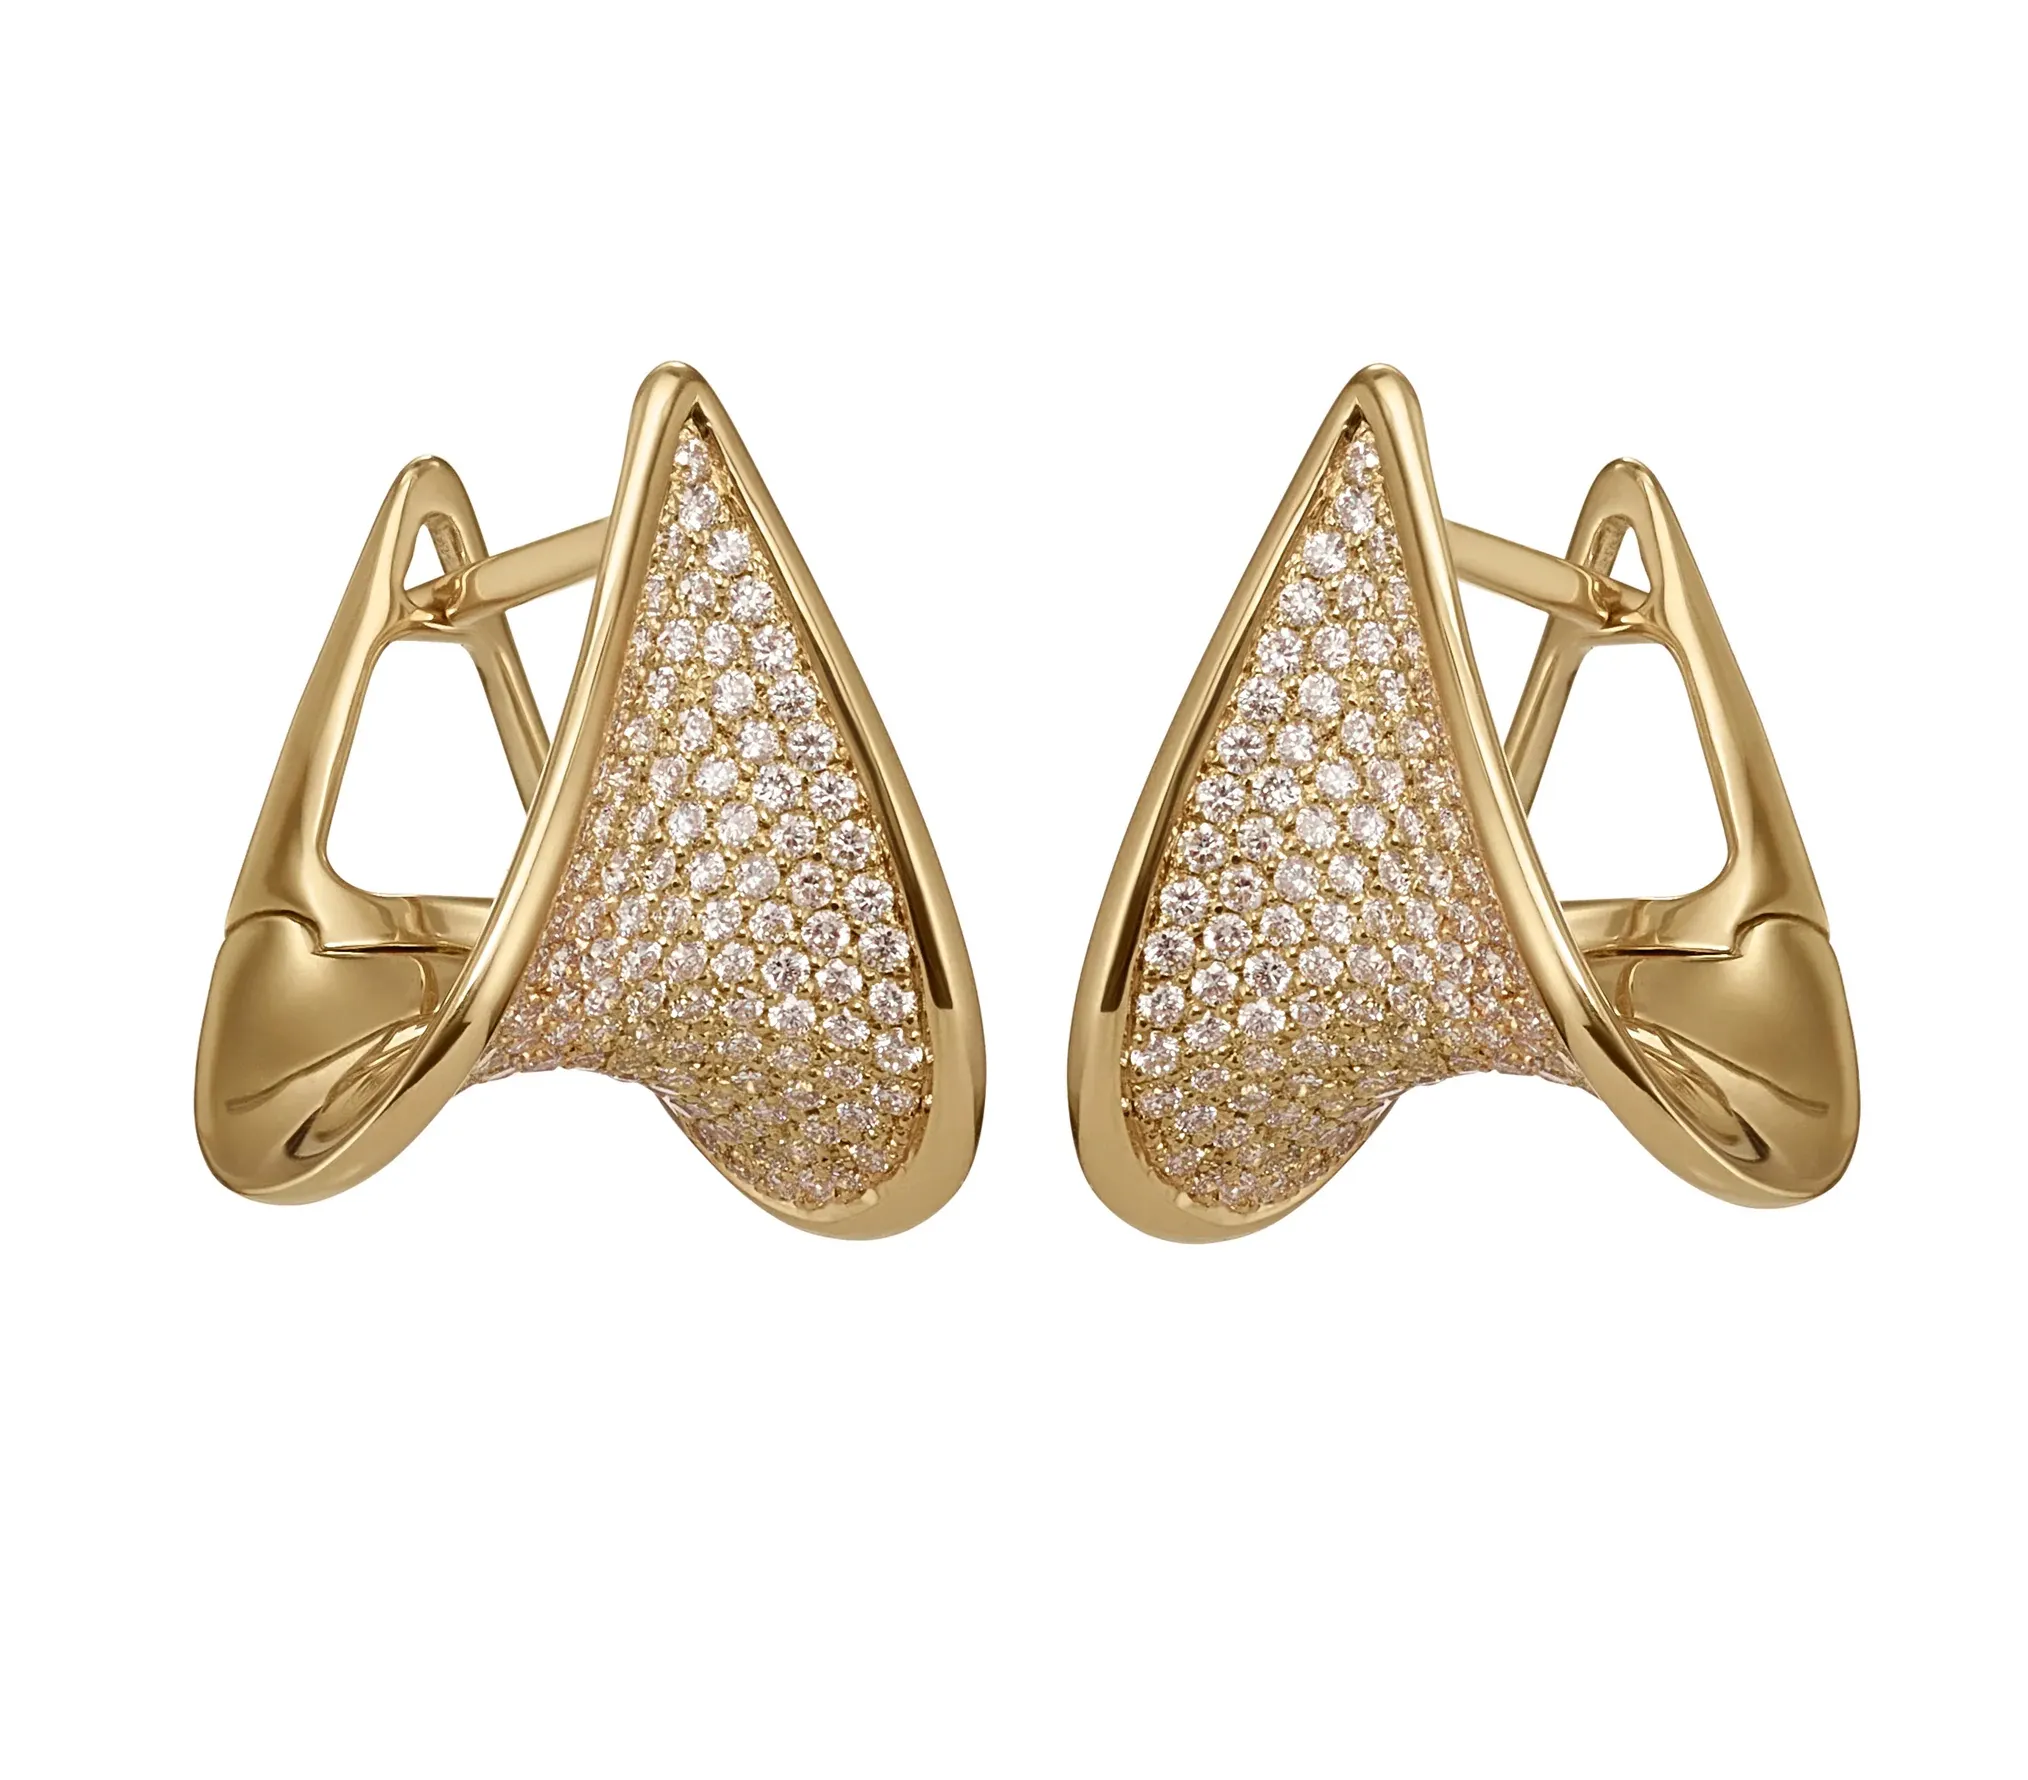 Milskye gentle engagement jewelry 18k gold plated brass pave diamond hoop earrings